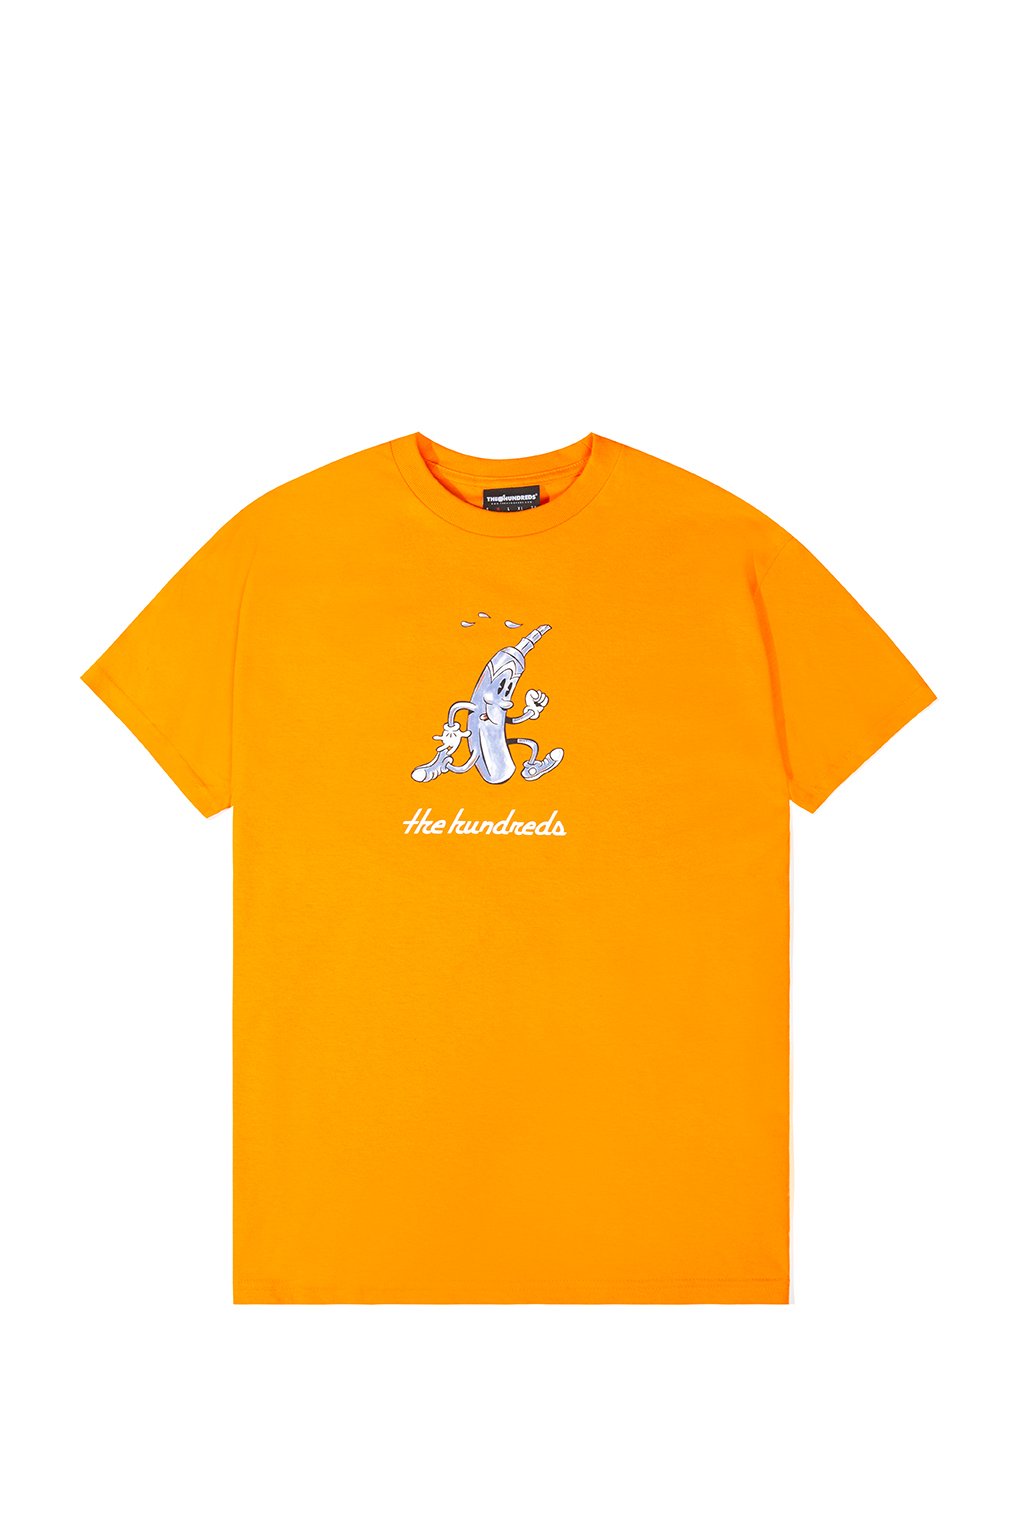 Black Lines T-Shirt - Orange